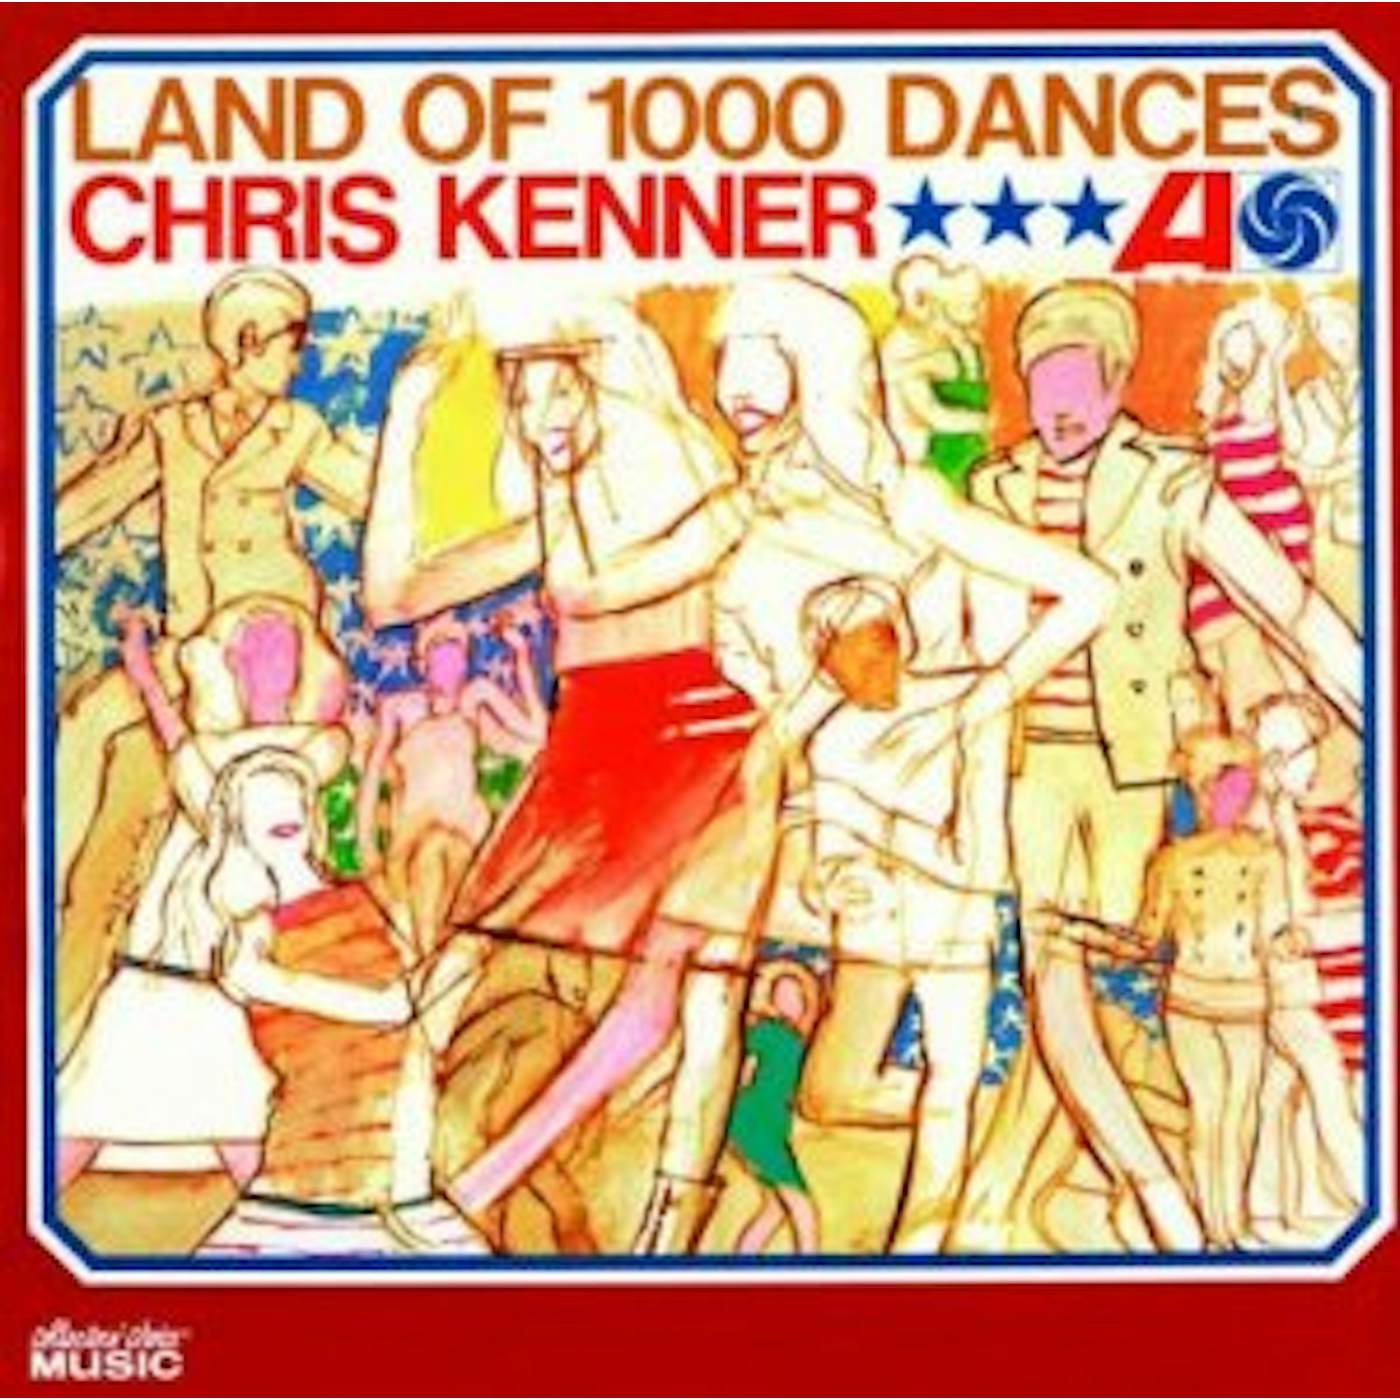 Chris Kenner LAND OF 1000 DANCES CD